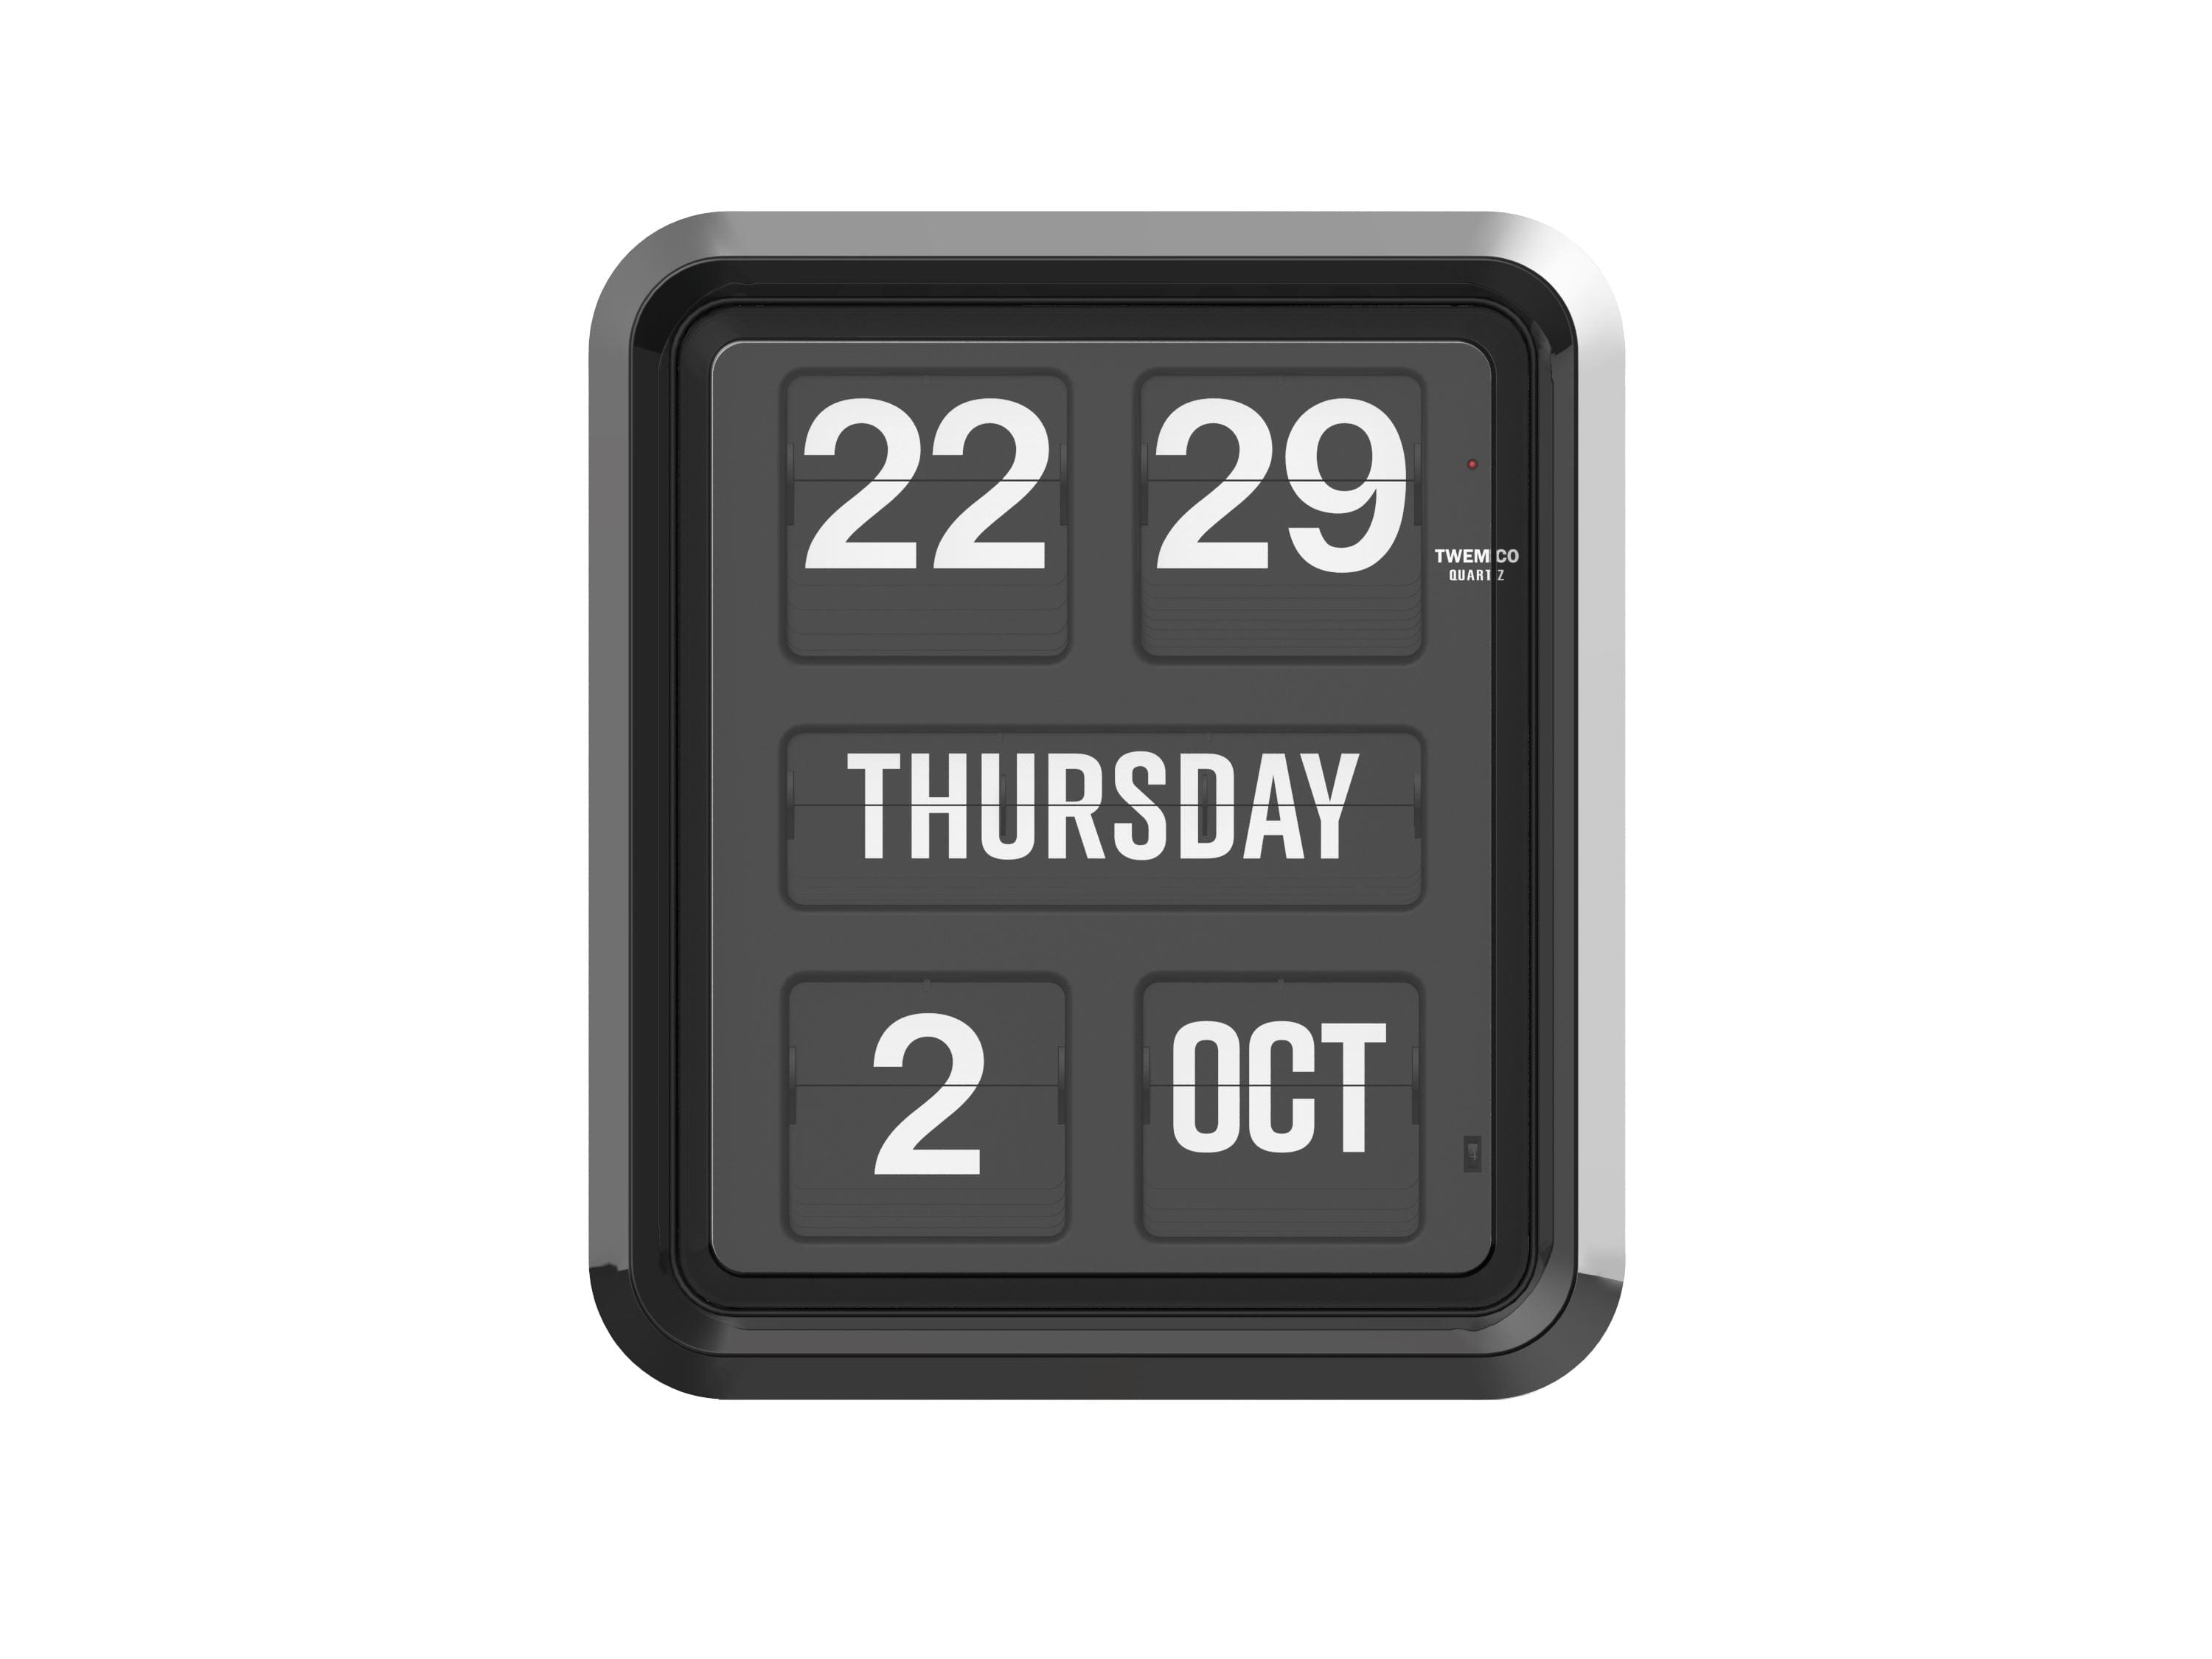 TWEMCO Calendar Wall Flip Clock BQ-170 Wall Clock TWEMCO Black Case Black Dial English AM/PM